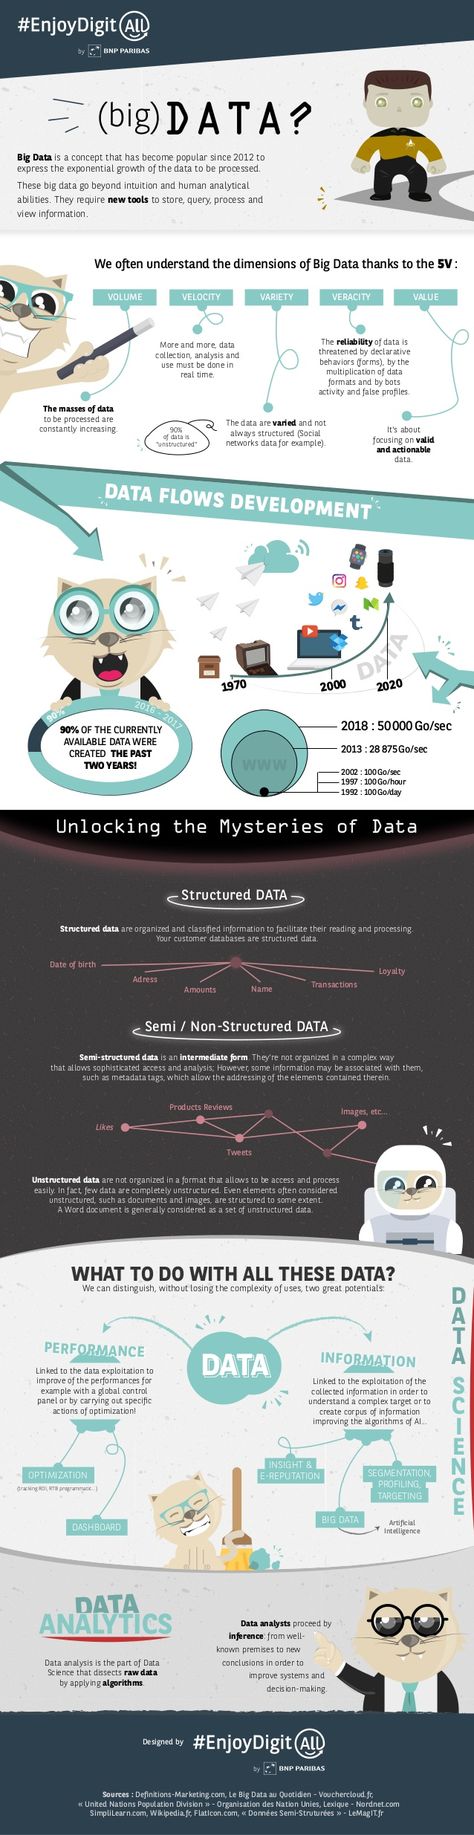 (Big) Data infographic - EnjoyDigitAll by BNP Paribas Big Data, Infographics, Big Data Analytics, Data Analytics, Data Structures, Big Data Infographic, Marketing Data, Analytics, Data